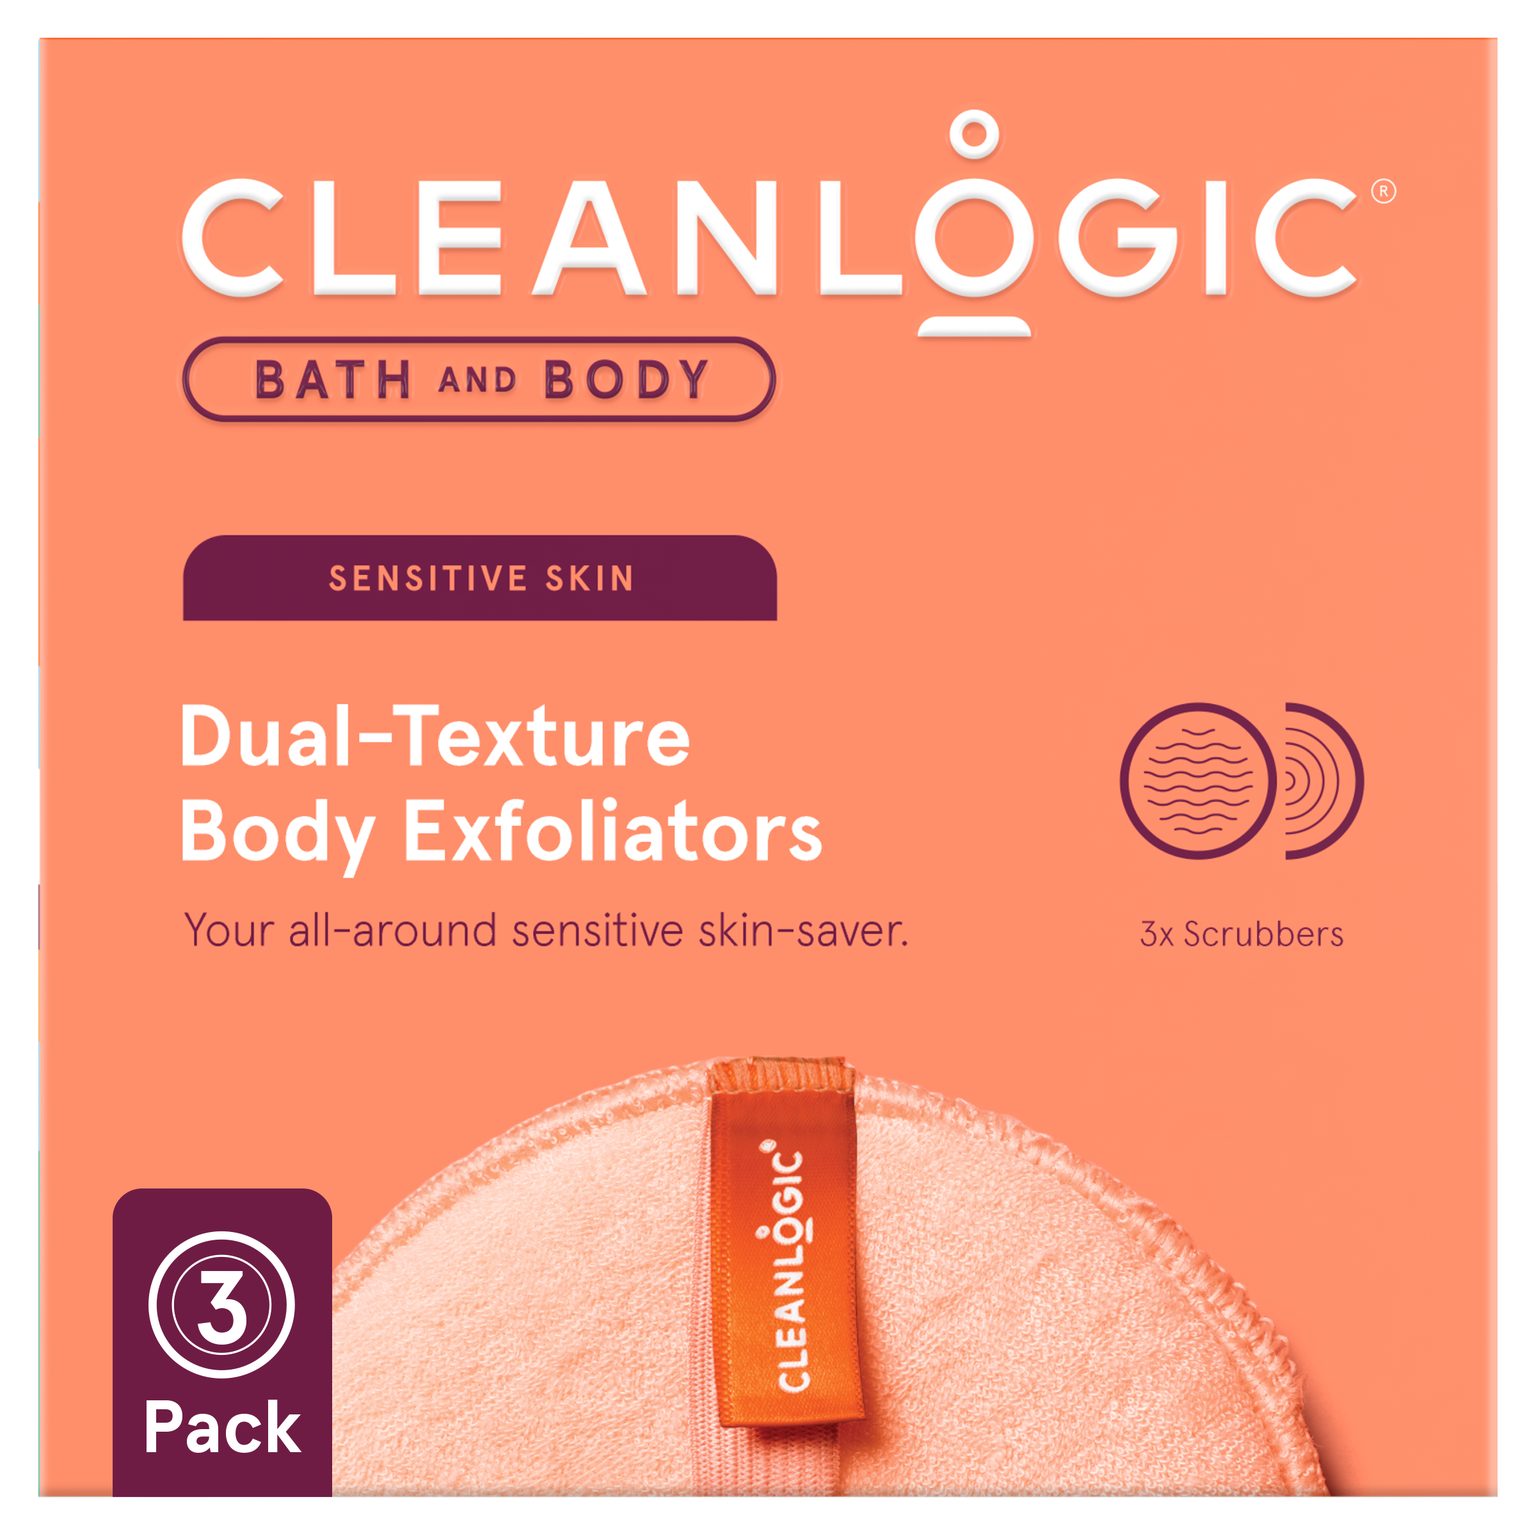 Bath and Body Sensitive Skin Dual-Texture Body Exfoliators, Assorted Colors, 3 Count